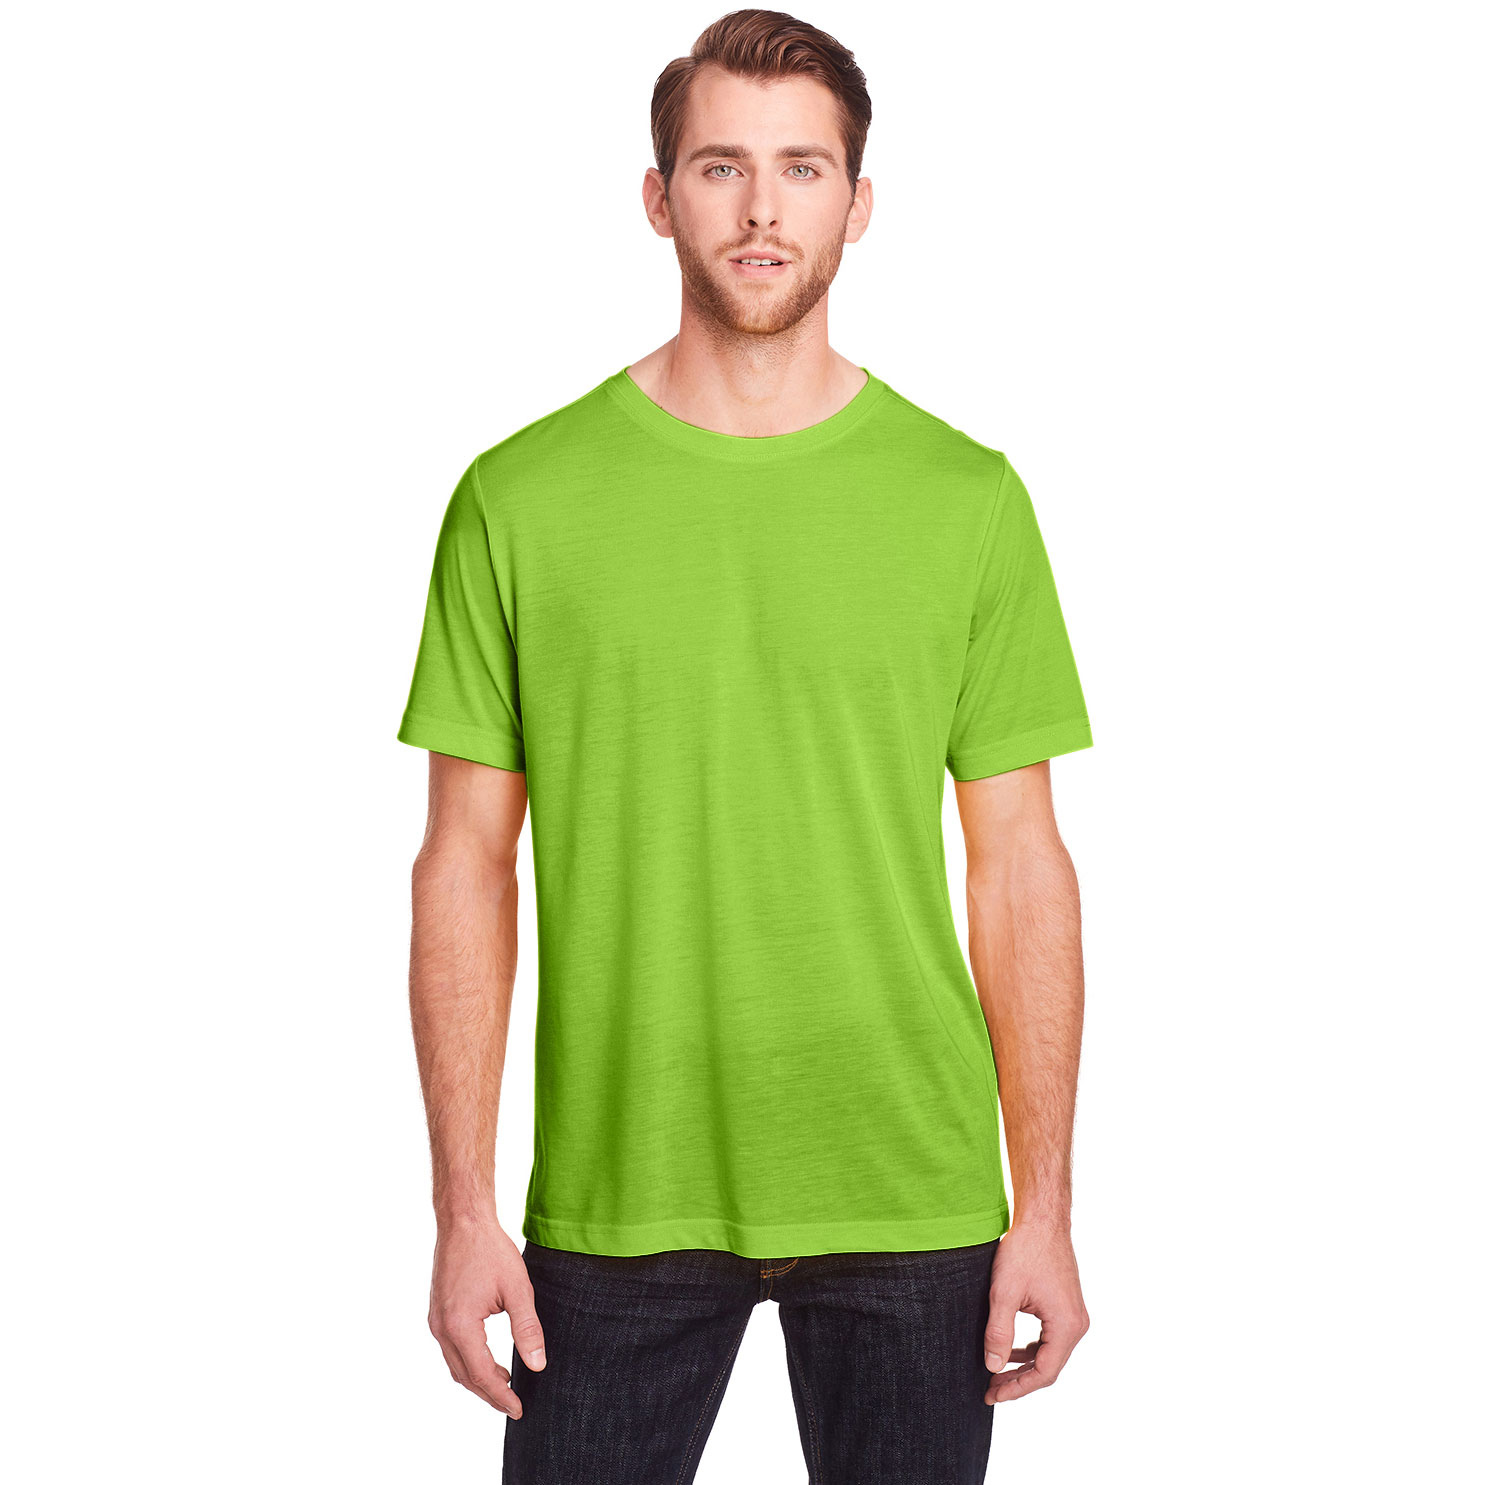 Core 365 CE111 Adult Fusion ChromaSoft Performance T-Shirt - Acid Green ...